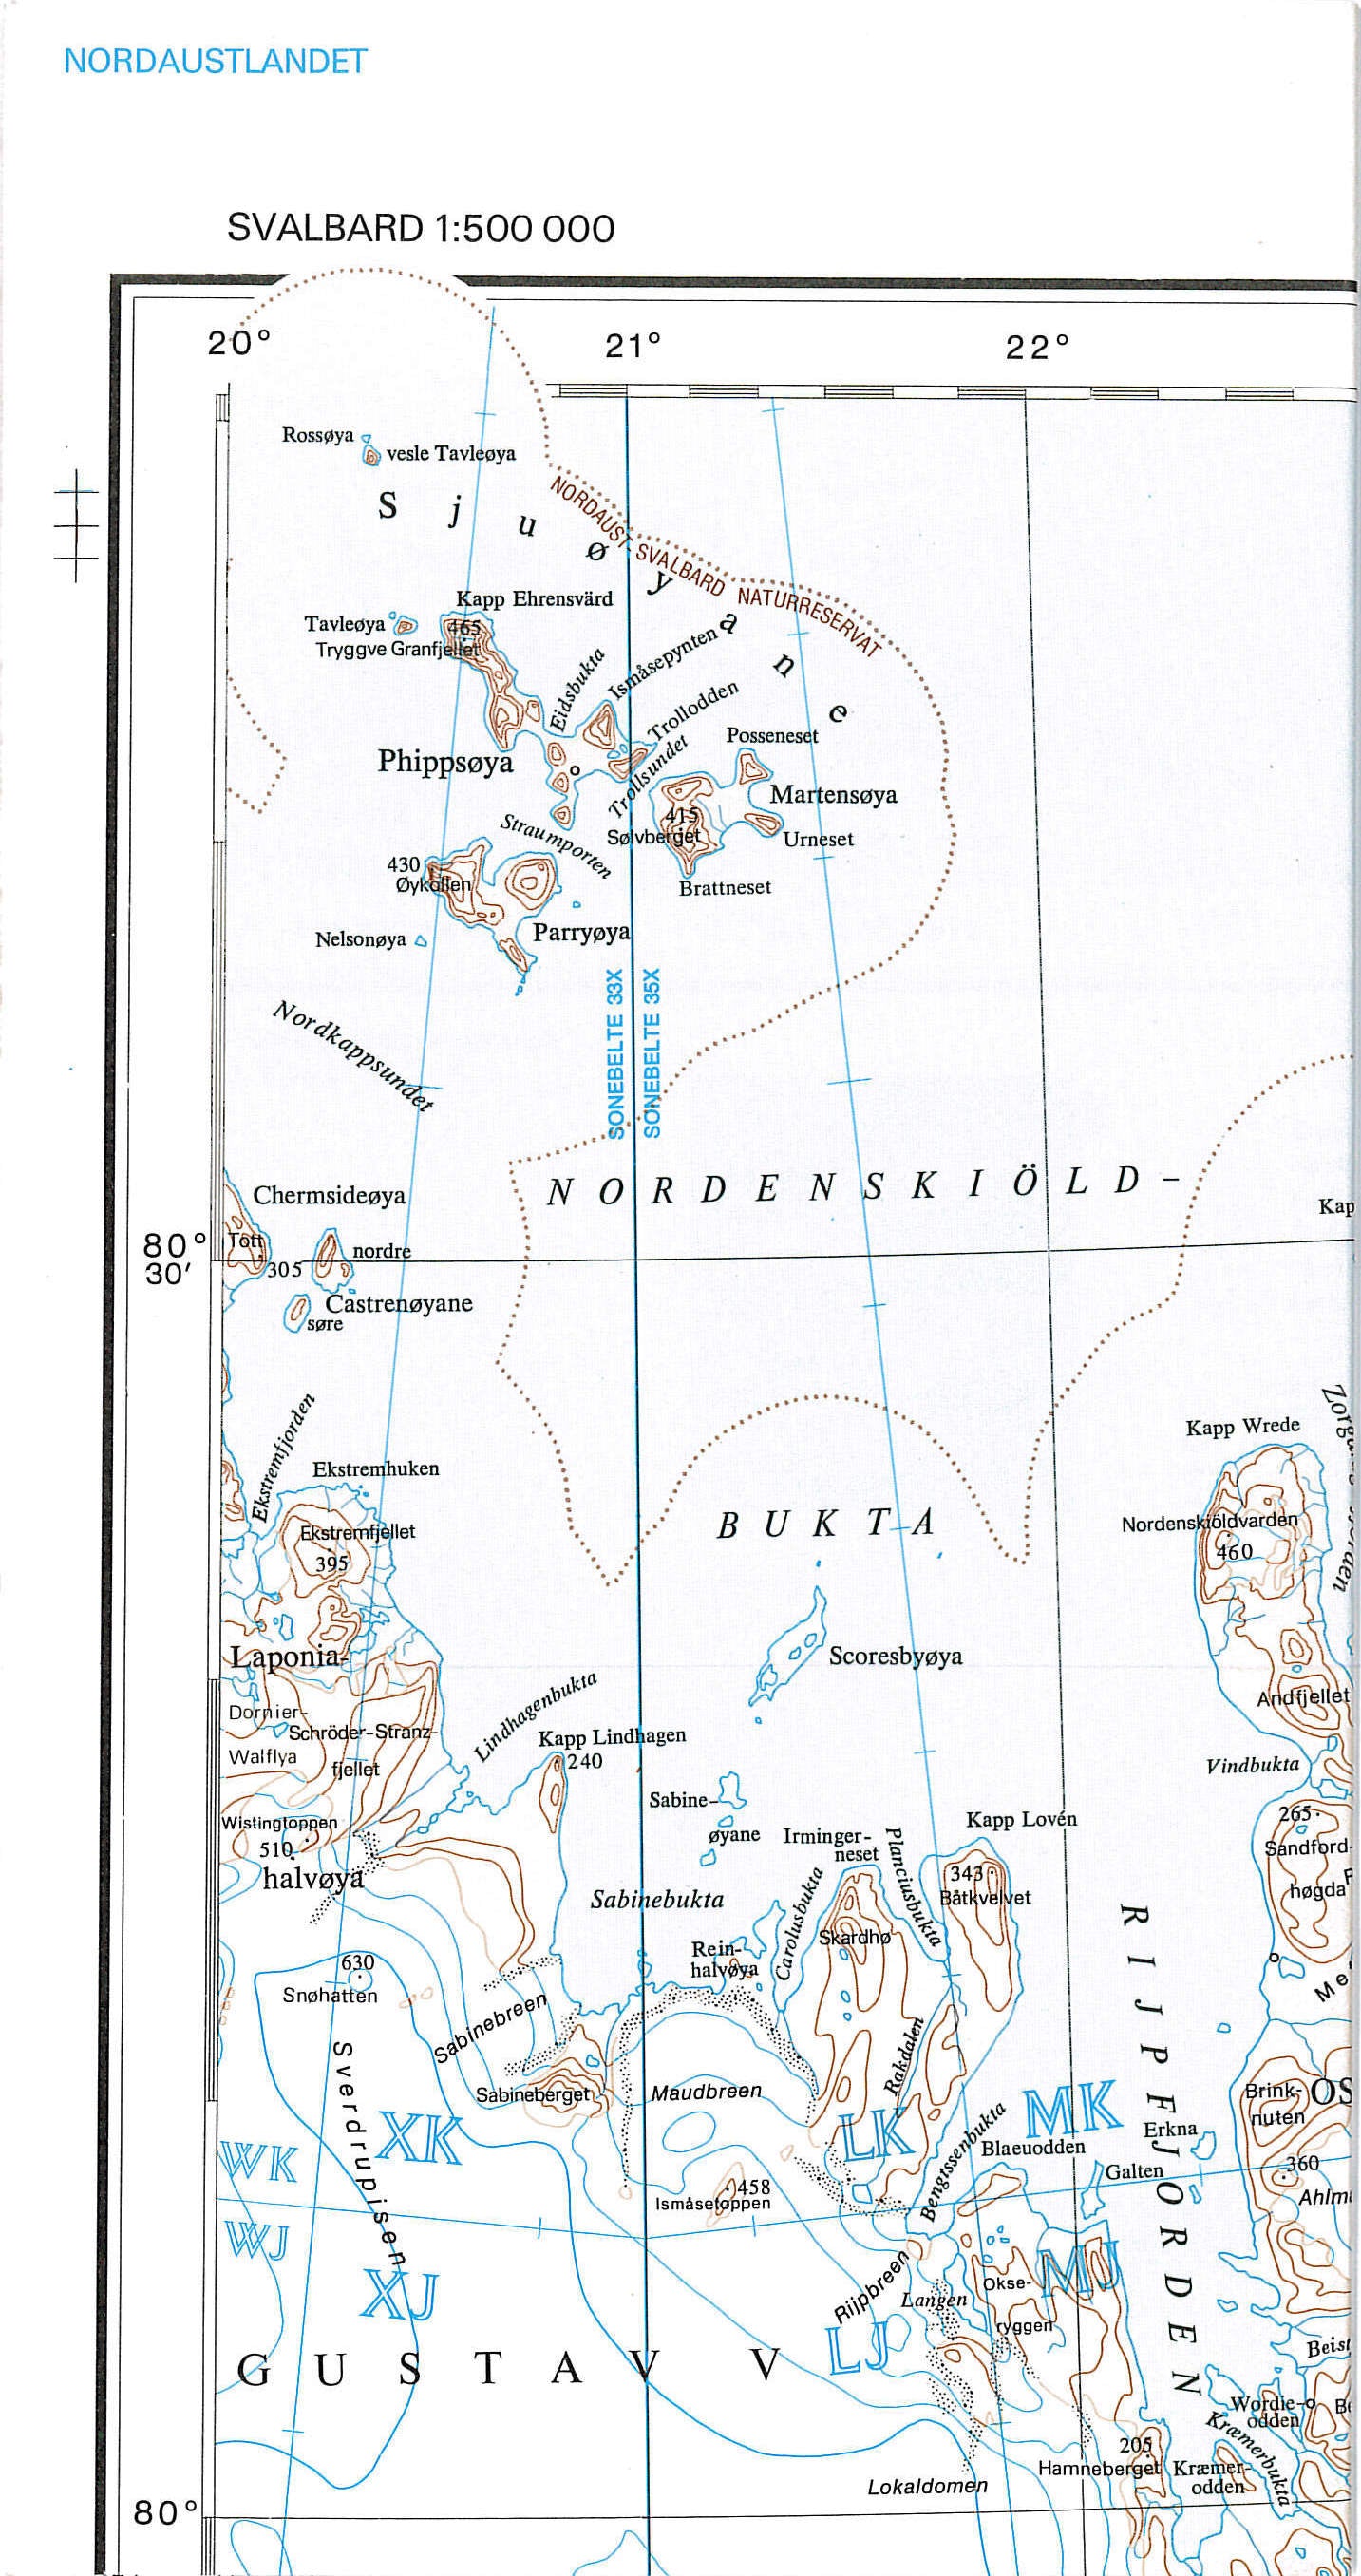 Kart Svalbard Nordauslandet 1:500,000 (Sheet 4)